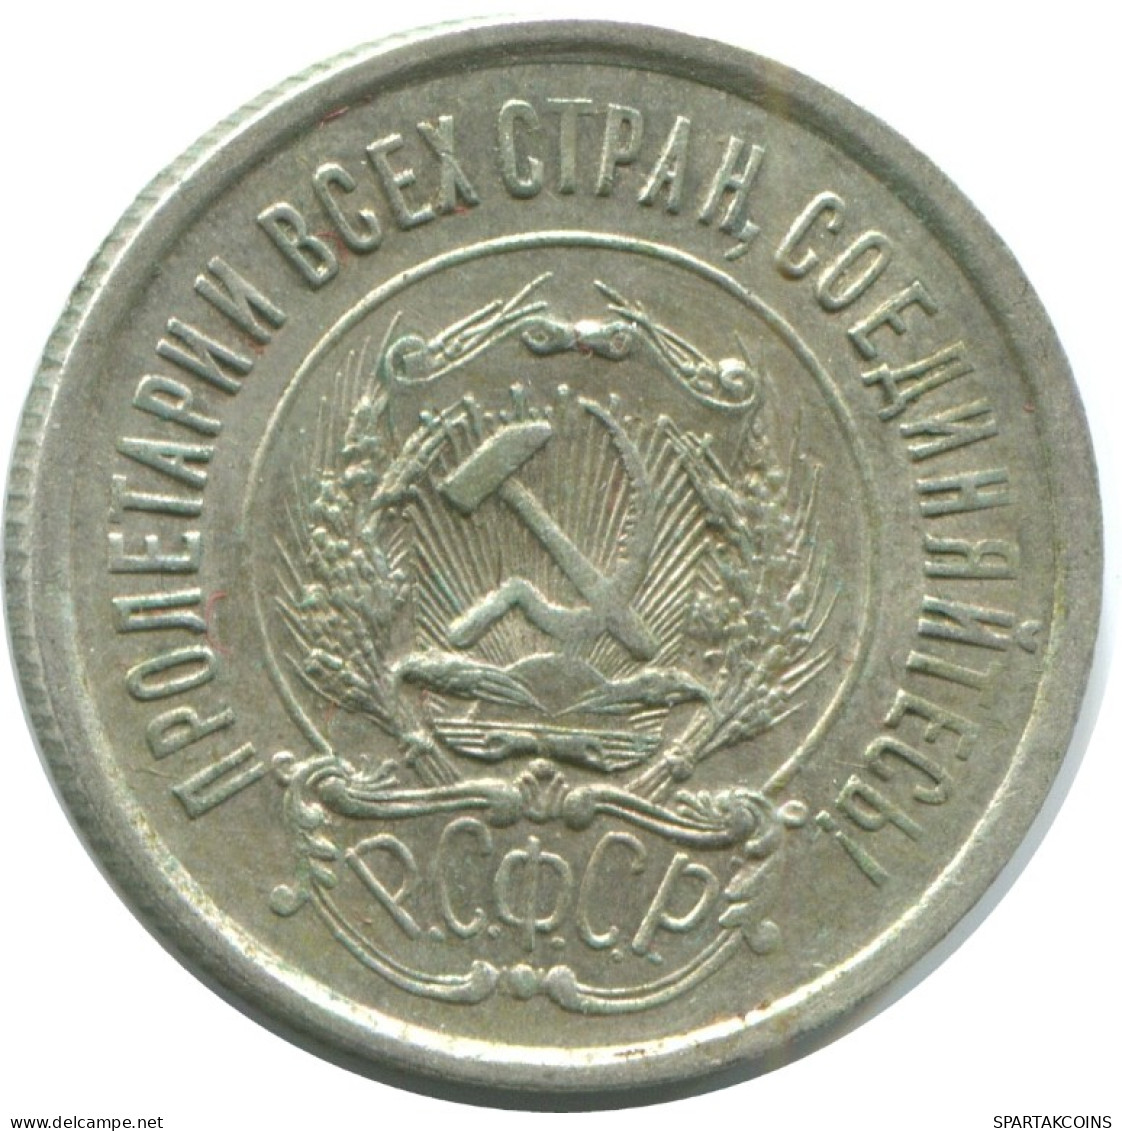 20 KOPEKS 1923 RUSSIA RSFSR SILVER Coin HIGH GRADE #AF460.4.U.A - Rusia